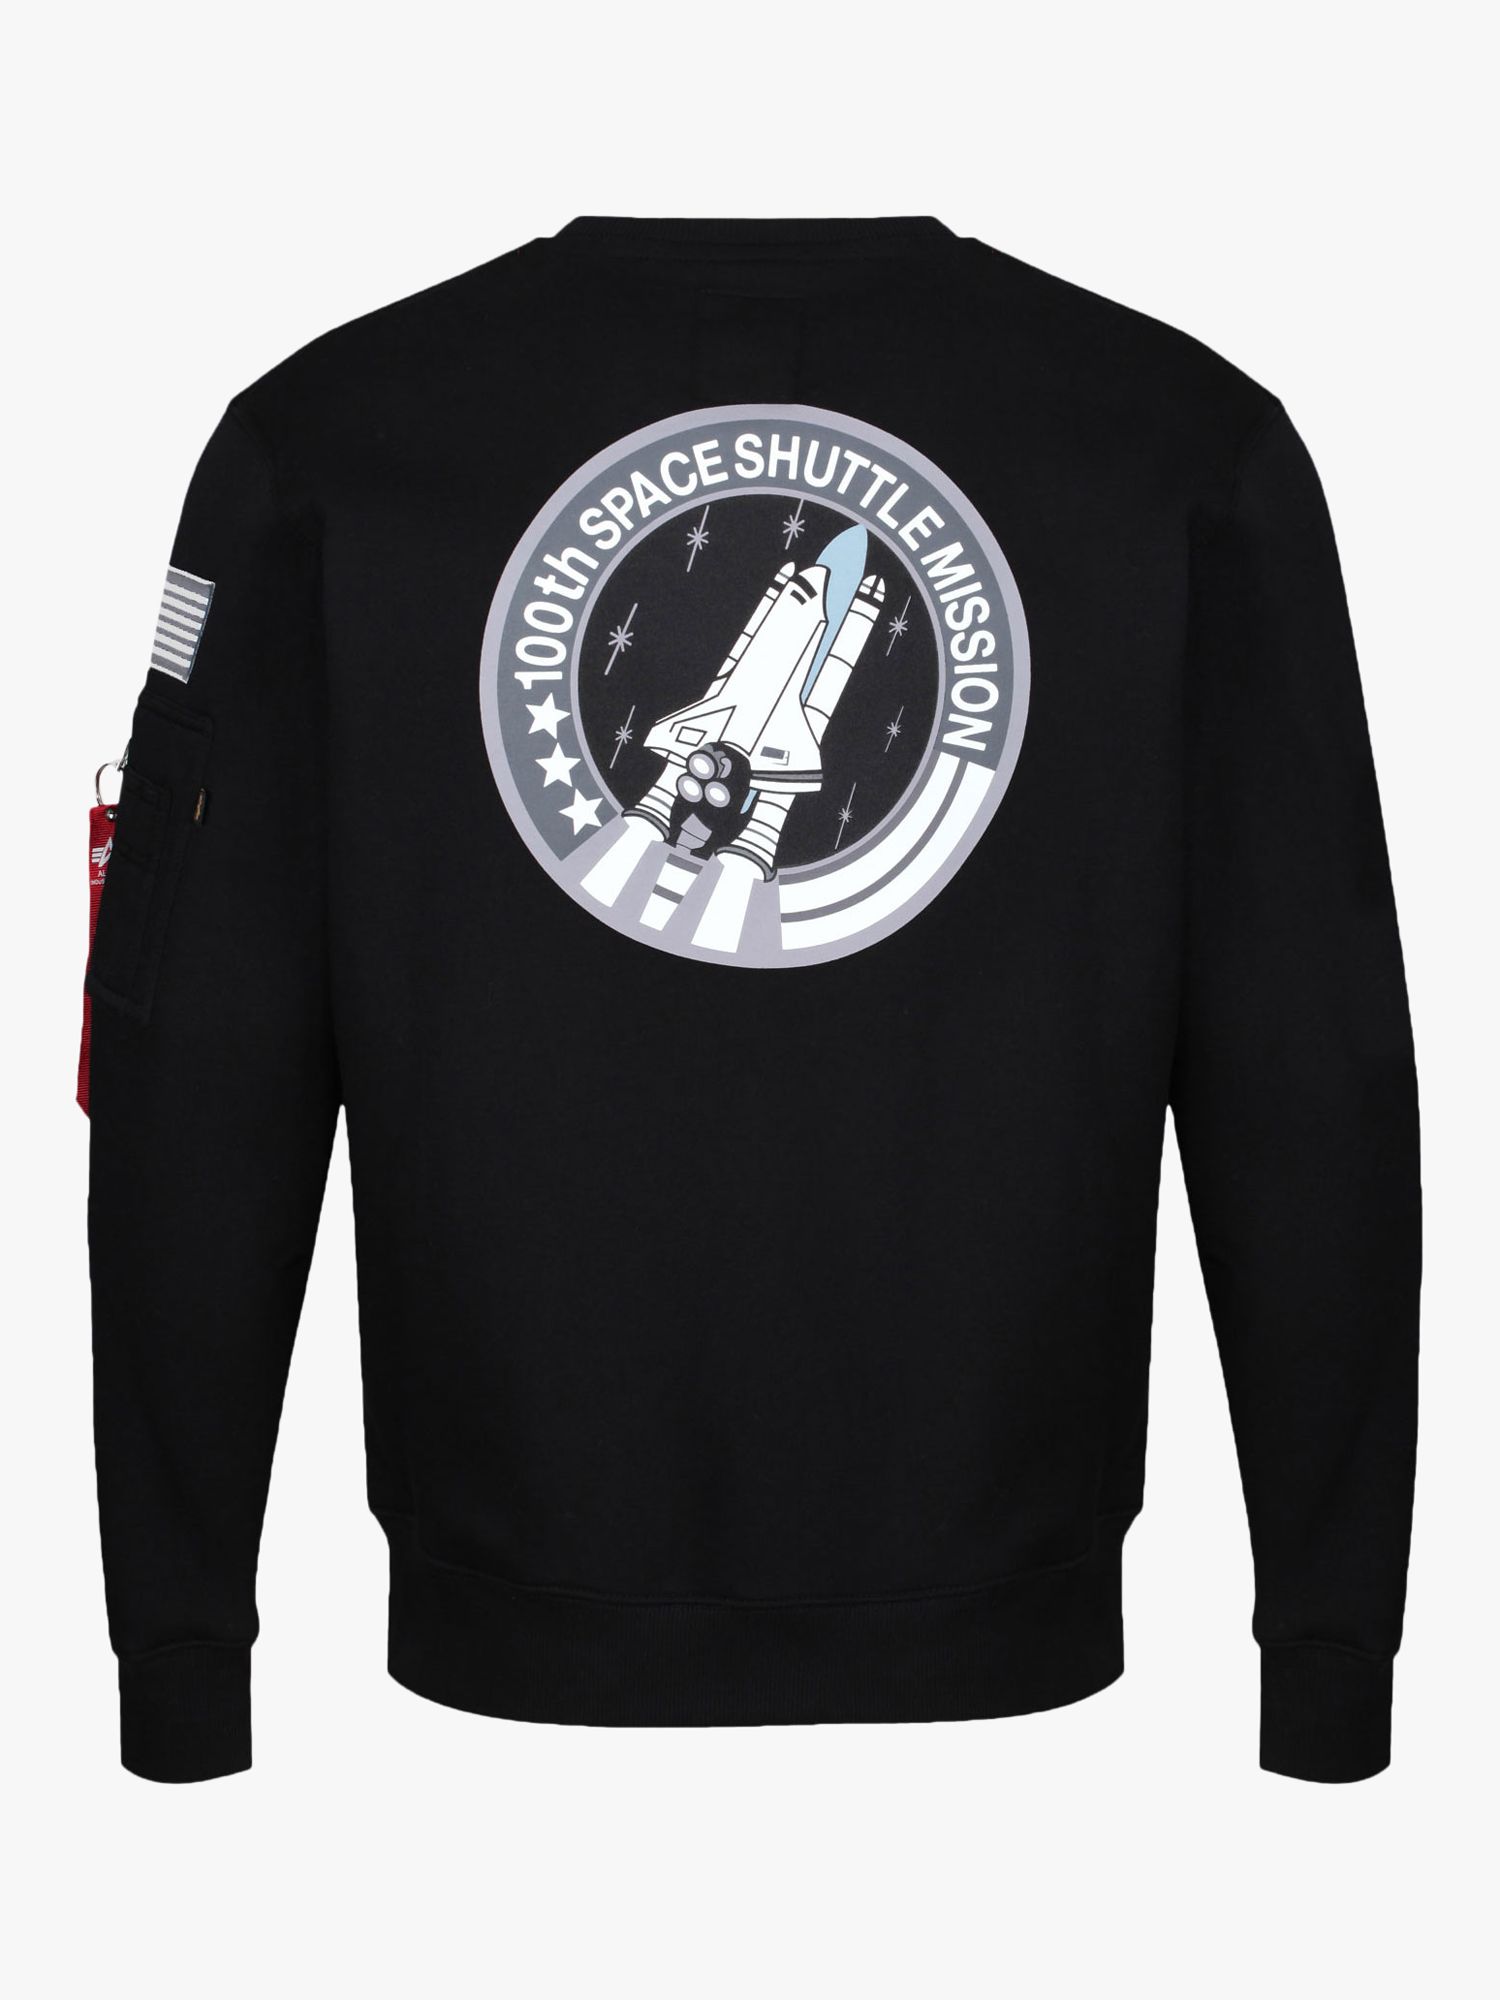 Alpha Industries X NASA Space Shuttle Logo Sweatshirt, 03 Black, S